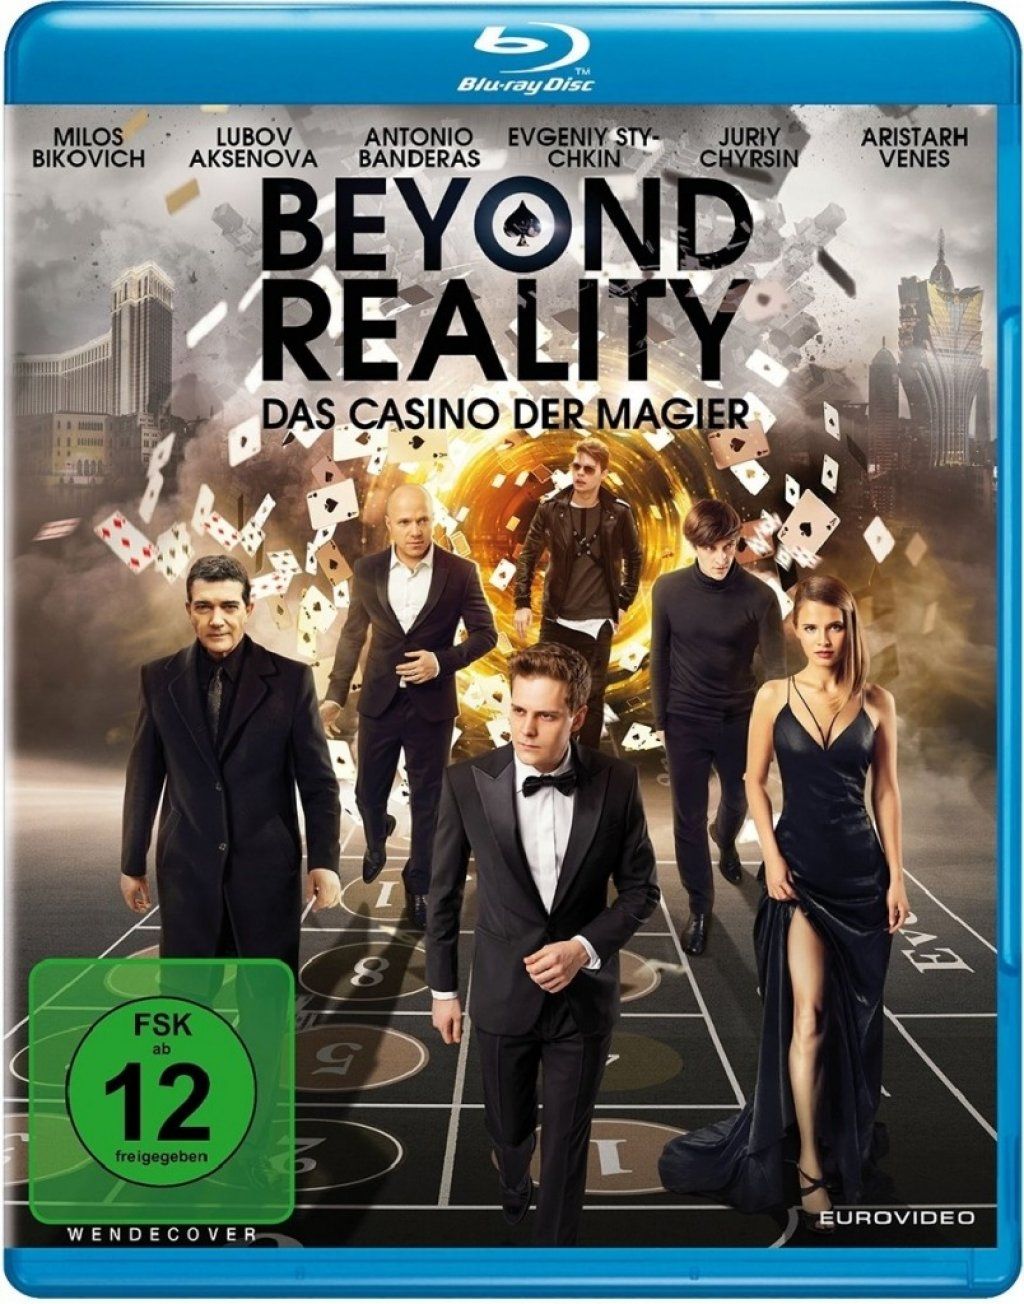 Beyond Reality - Das Casino der Magier  (BLURAY)